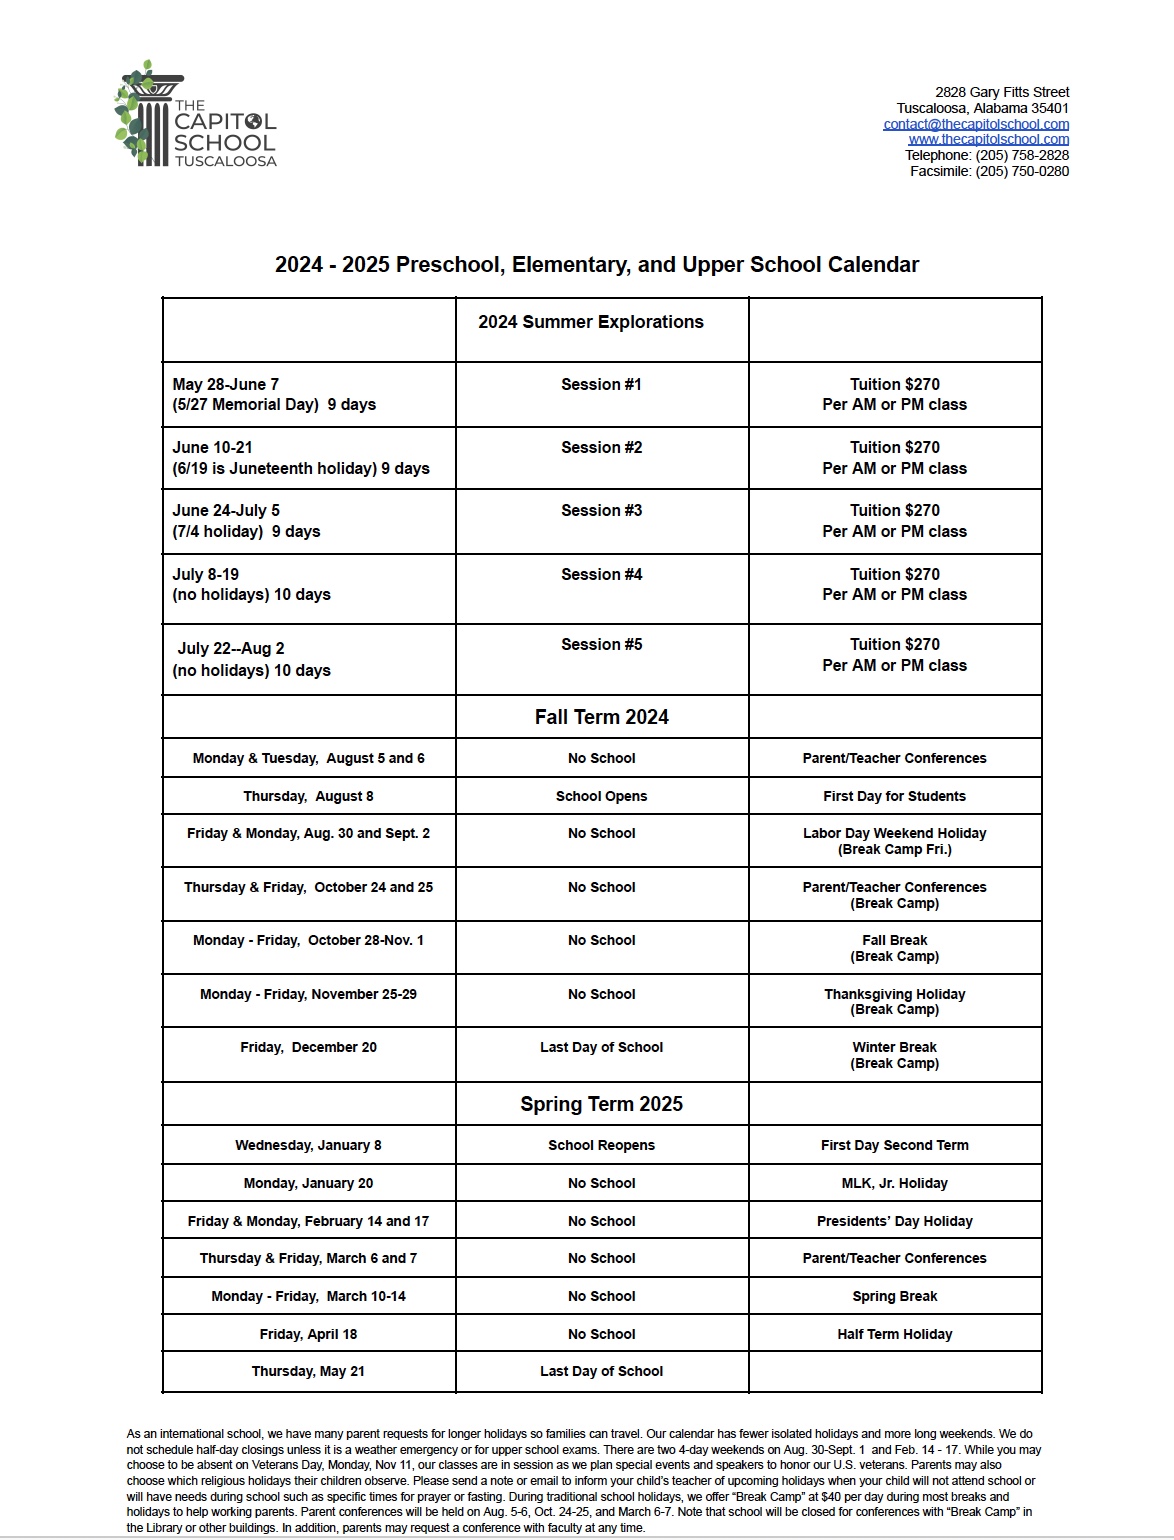 Preschool, Elementary, Upper School 2024-2025 Calendar